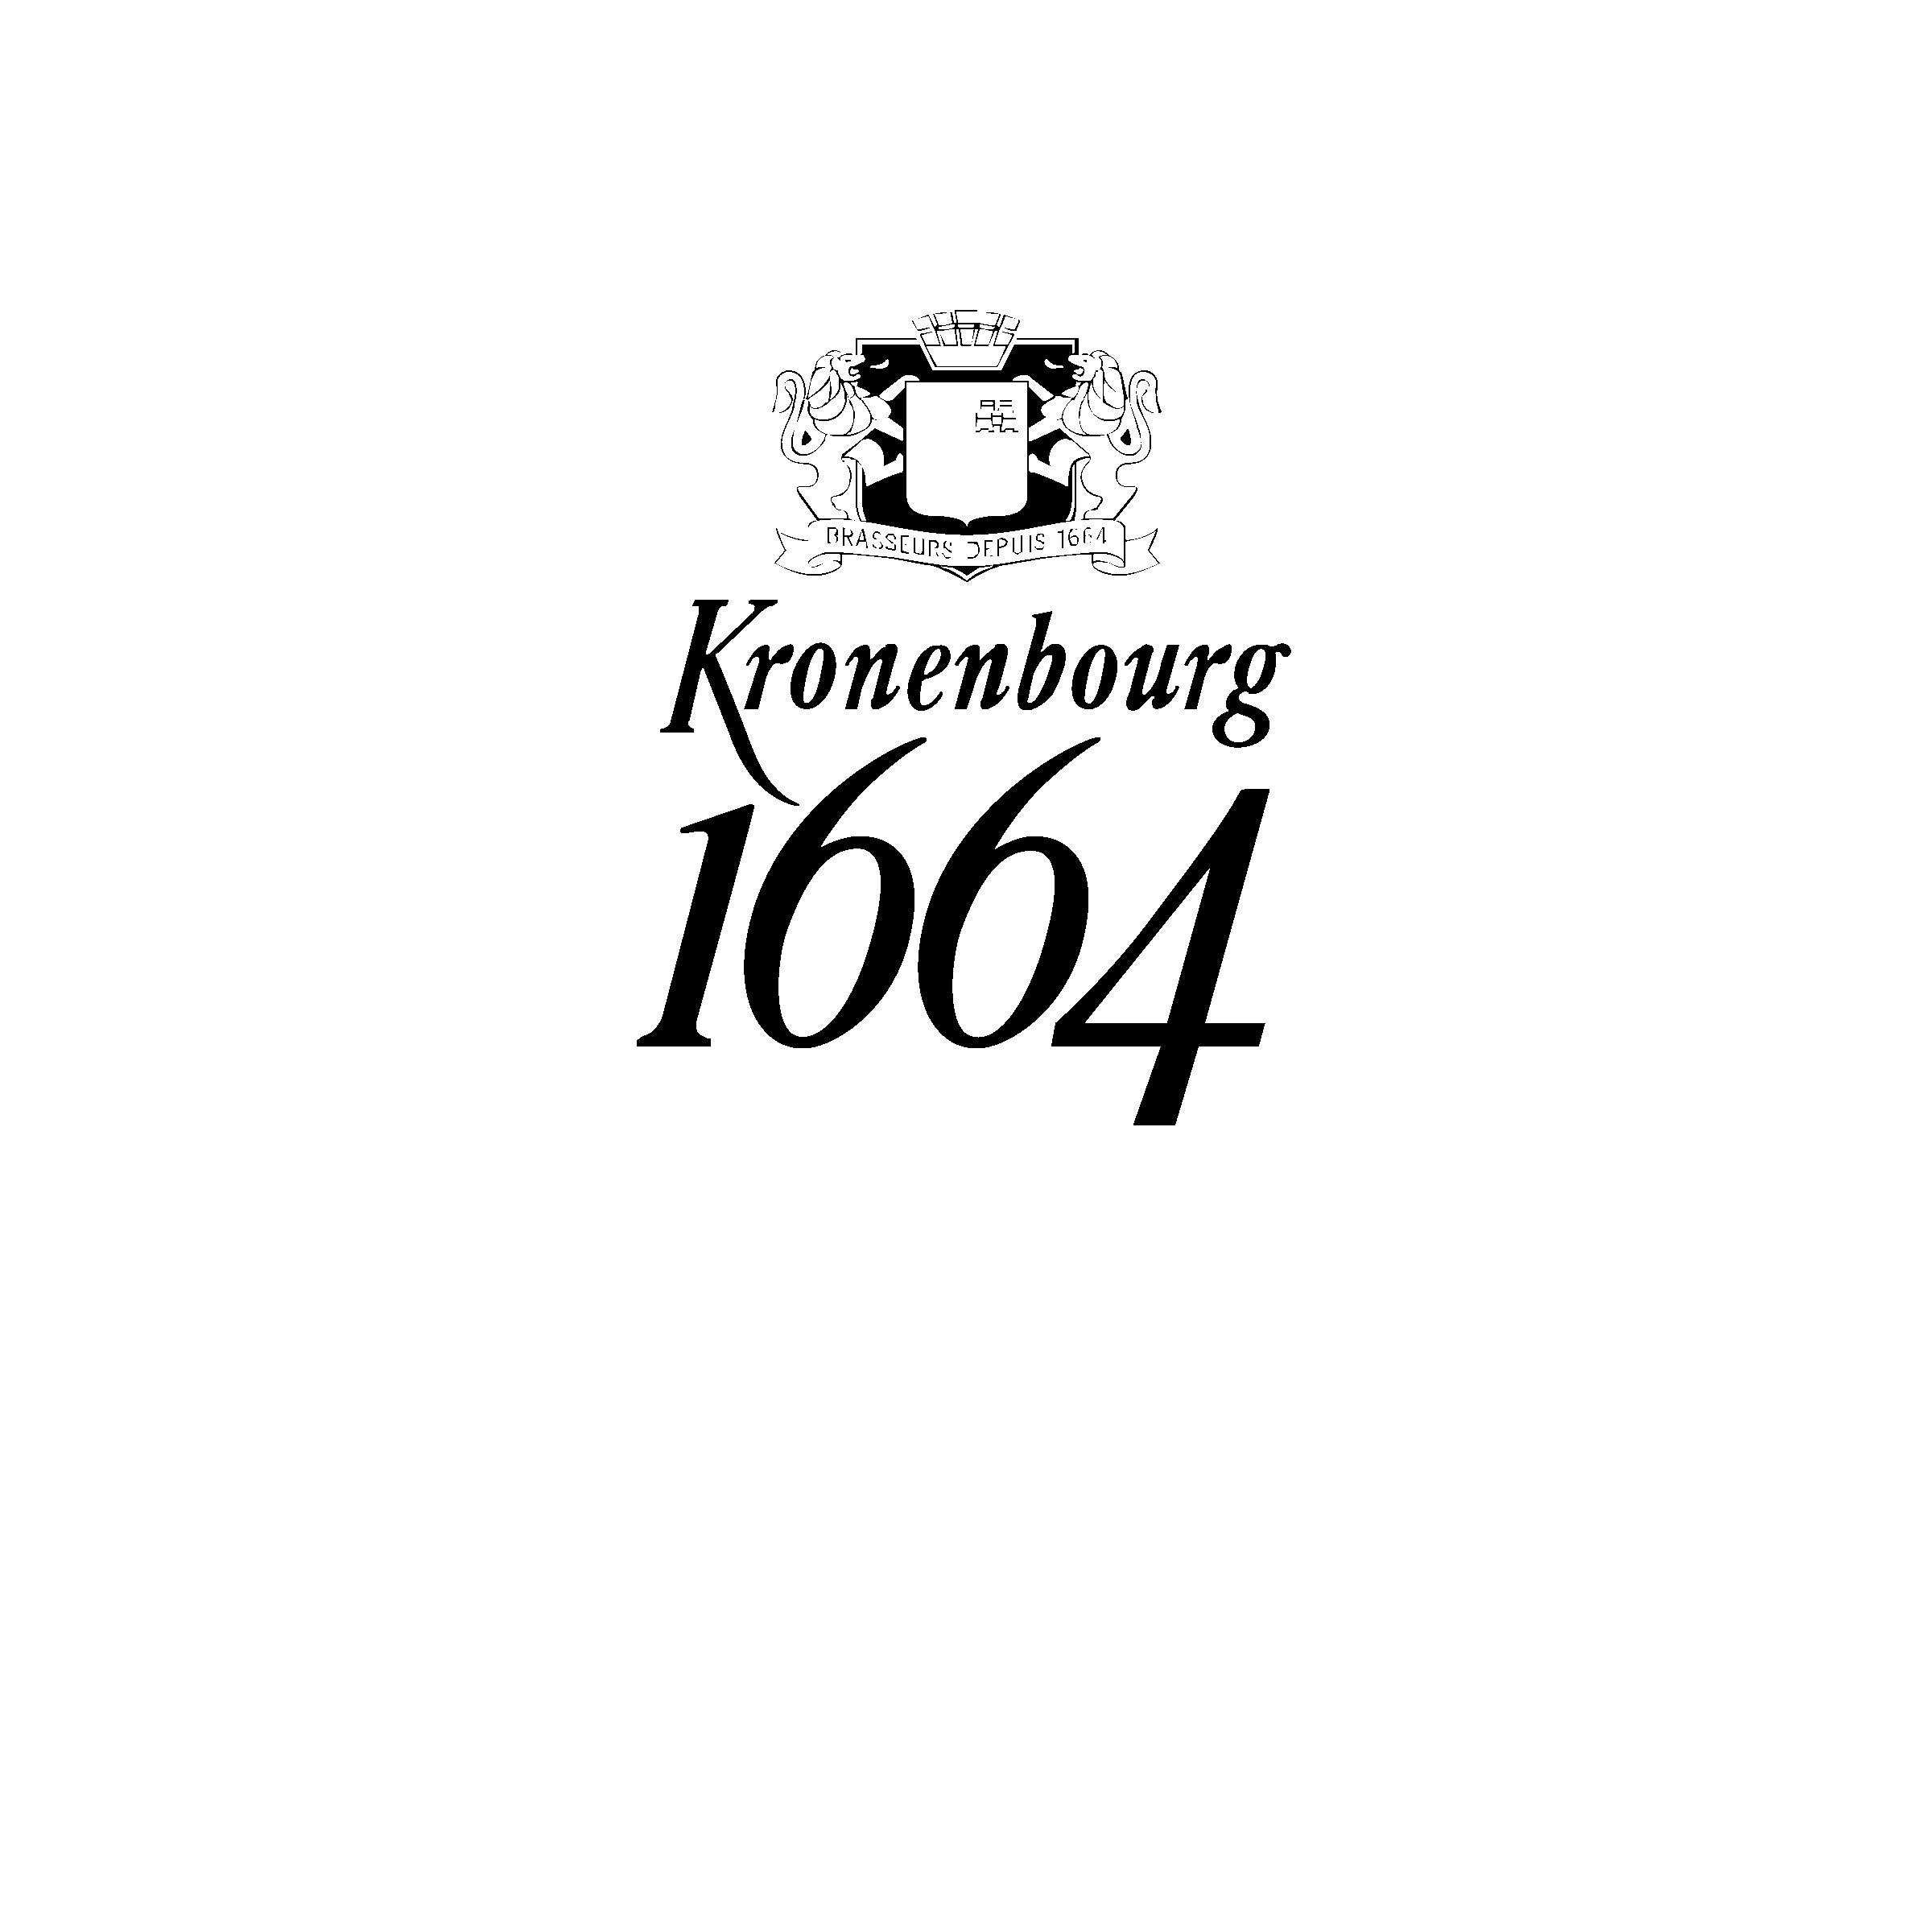 Kronenbourg Logo - Kronenbourg 1664 Logo PNG Transparent & SVG Vector - Freebie Supply